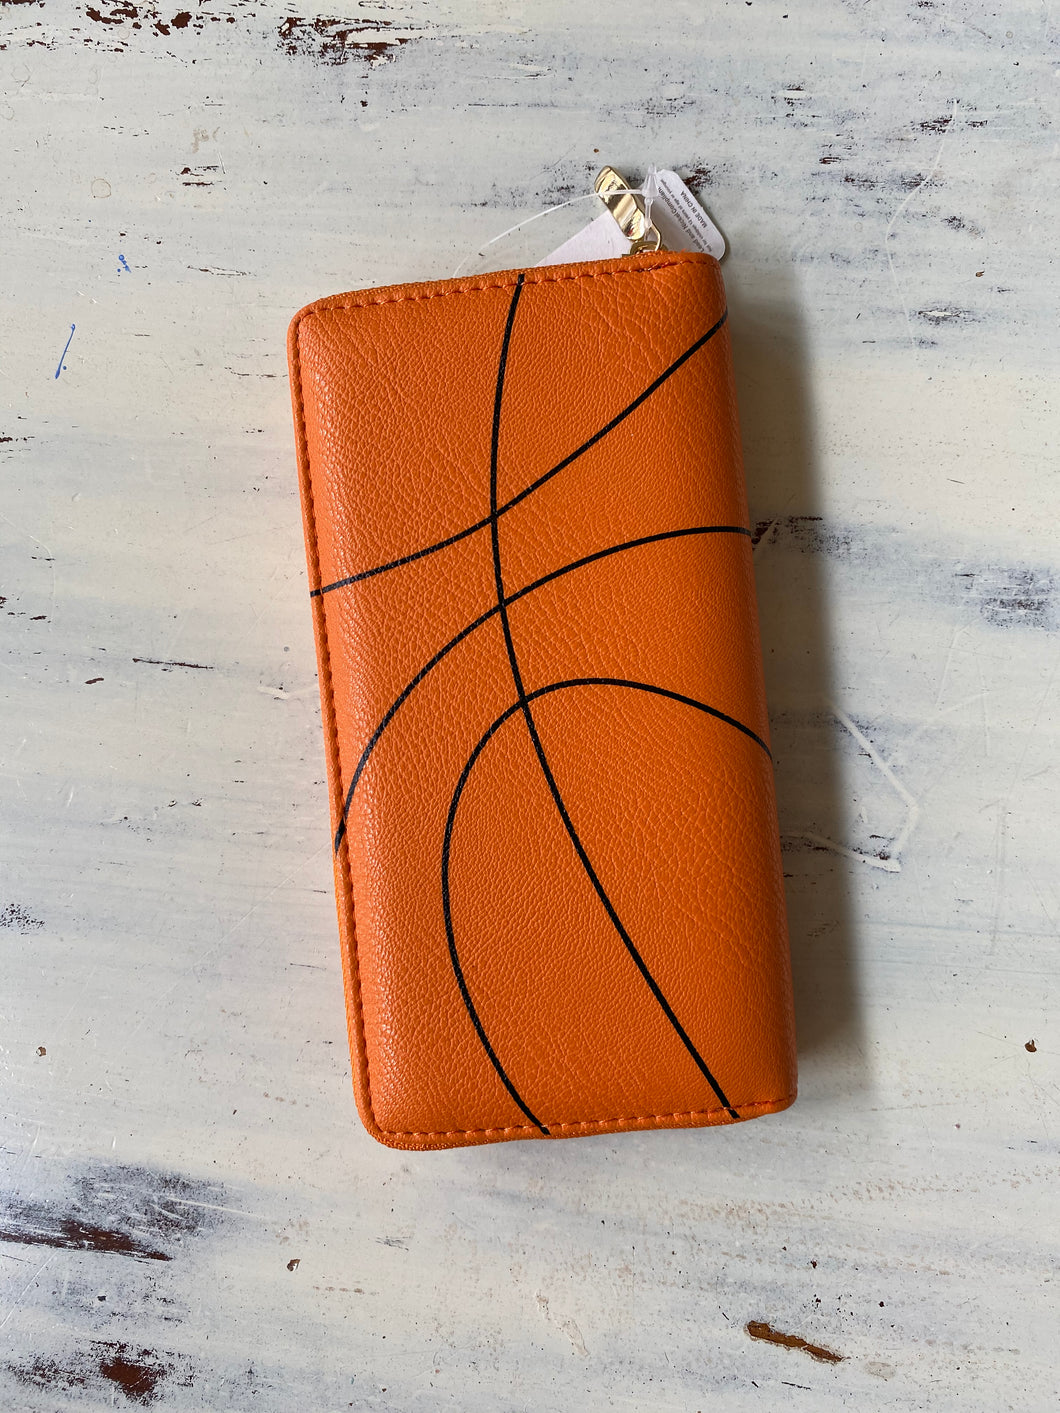 Basketball wallet